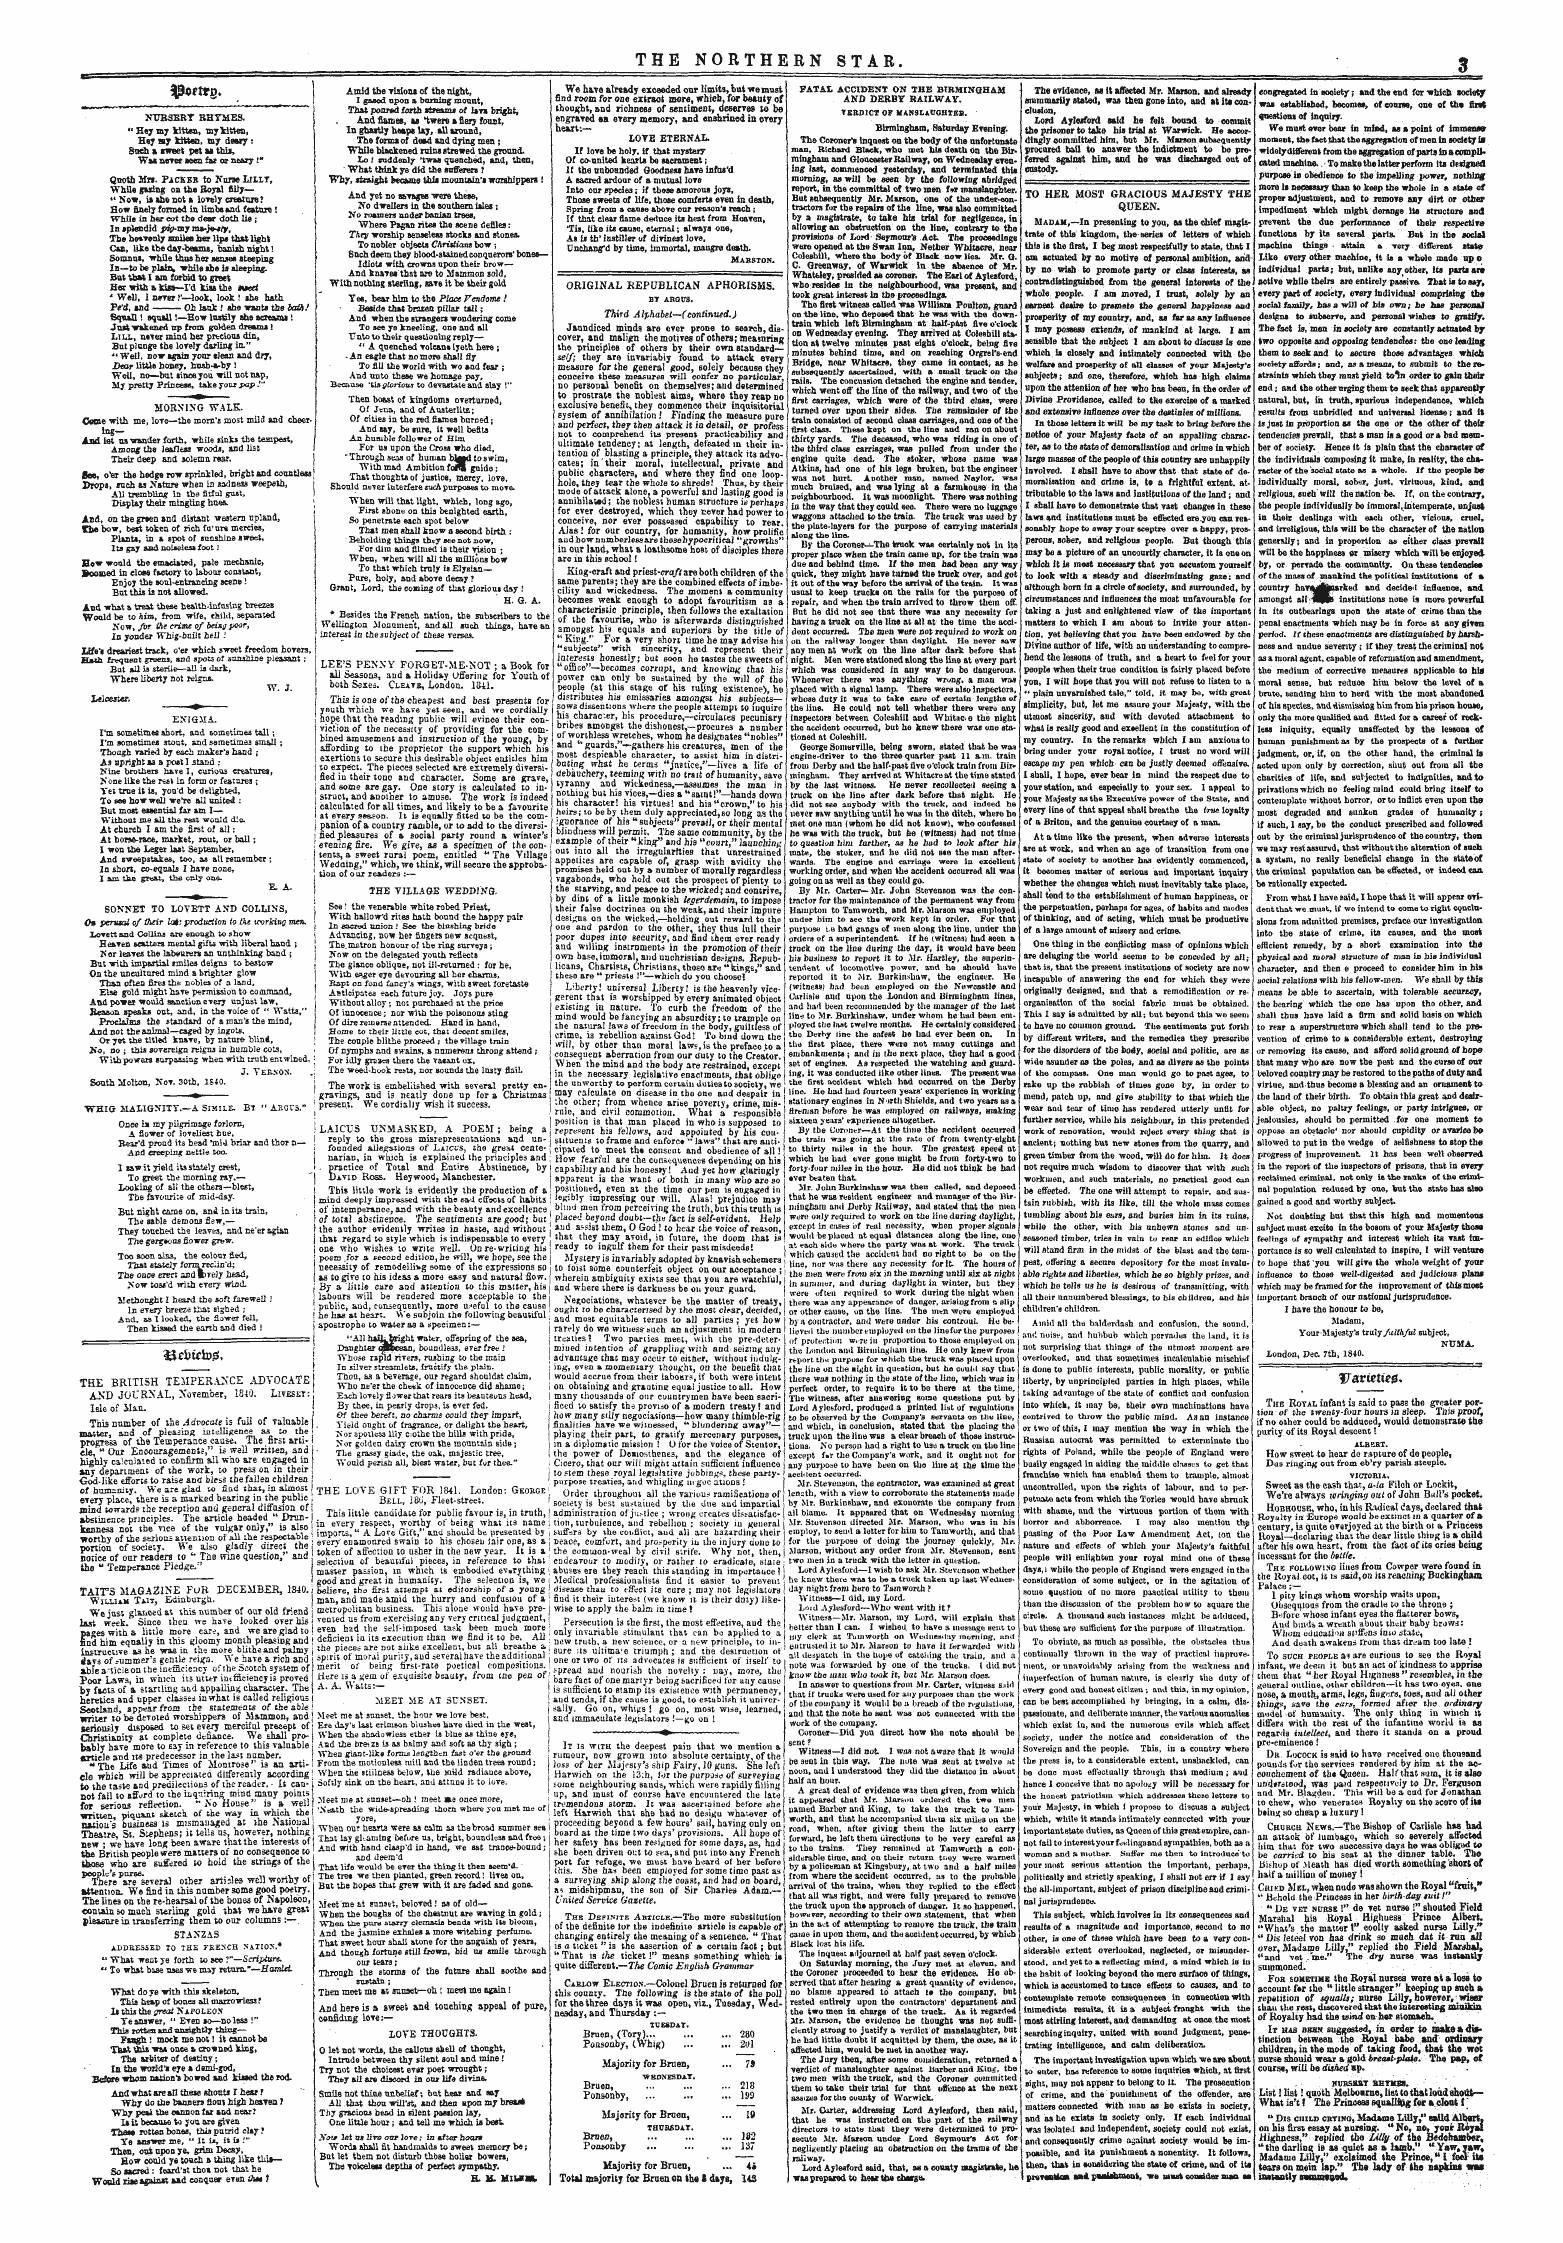 Northern Star (1837-1852): jS F Y, 3rd edition - Vavi*Tie#.